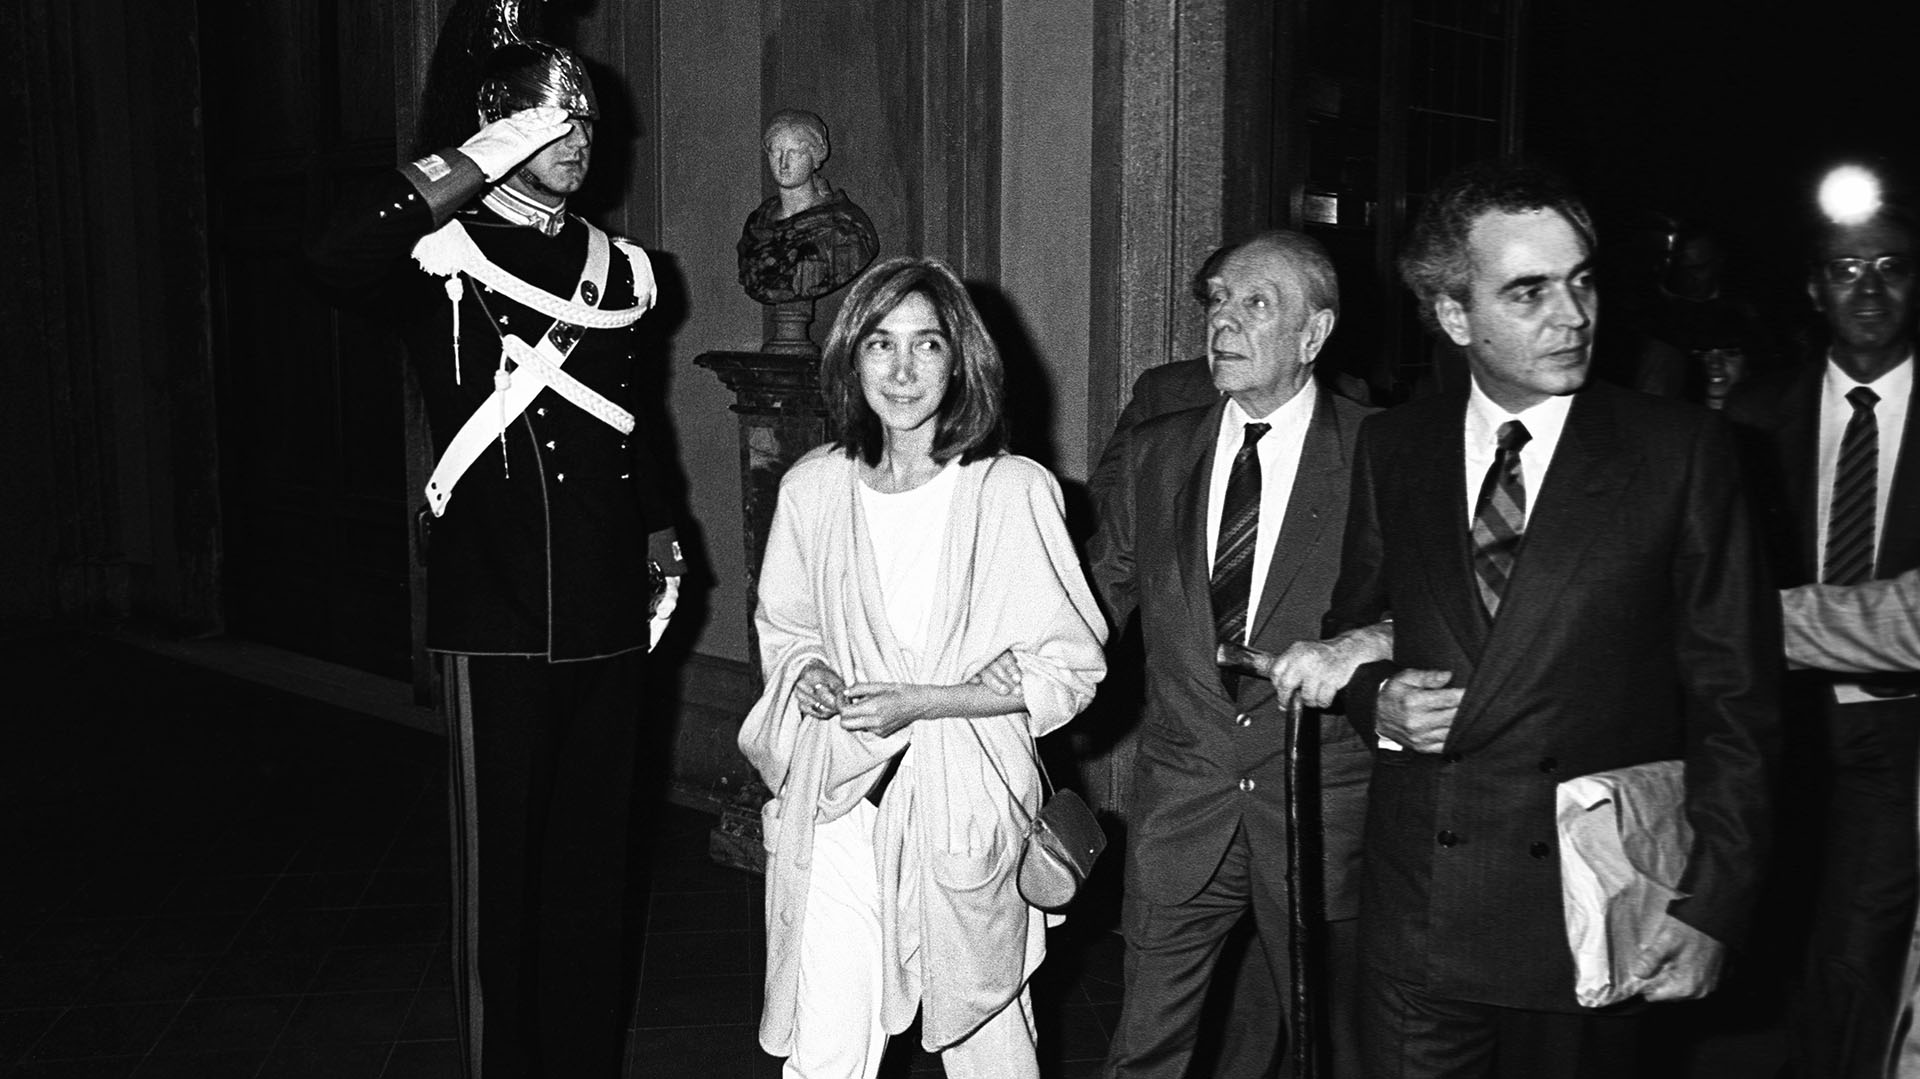 Jorge Luis Borges asiste al Premio Balzan, con MarÌa Kodama en 1981 en Roma, Italia. (Foto de Stefano Montesi/Corbis vía Getty Images)
